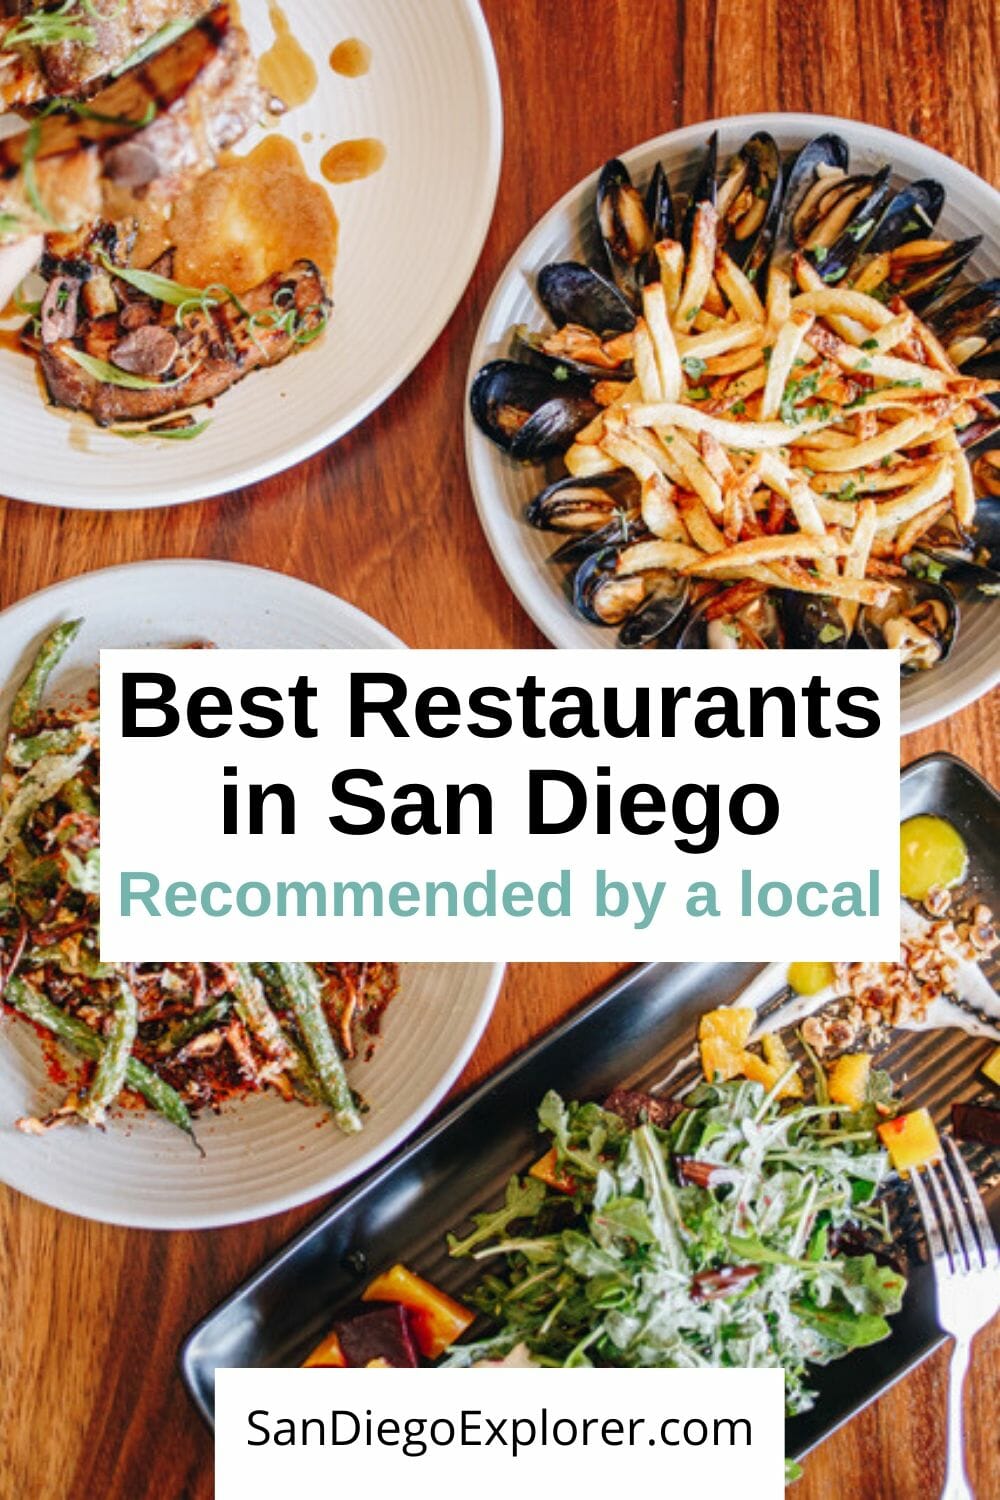 30 Best Restaurants In San Diego by Neighborhood